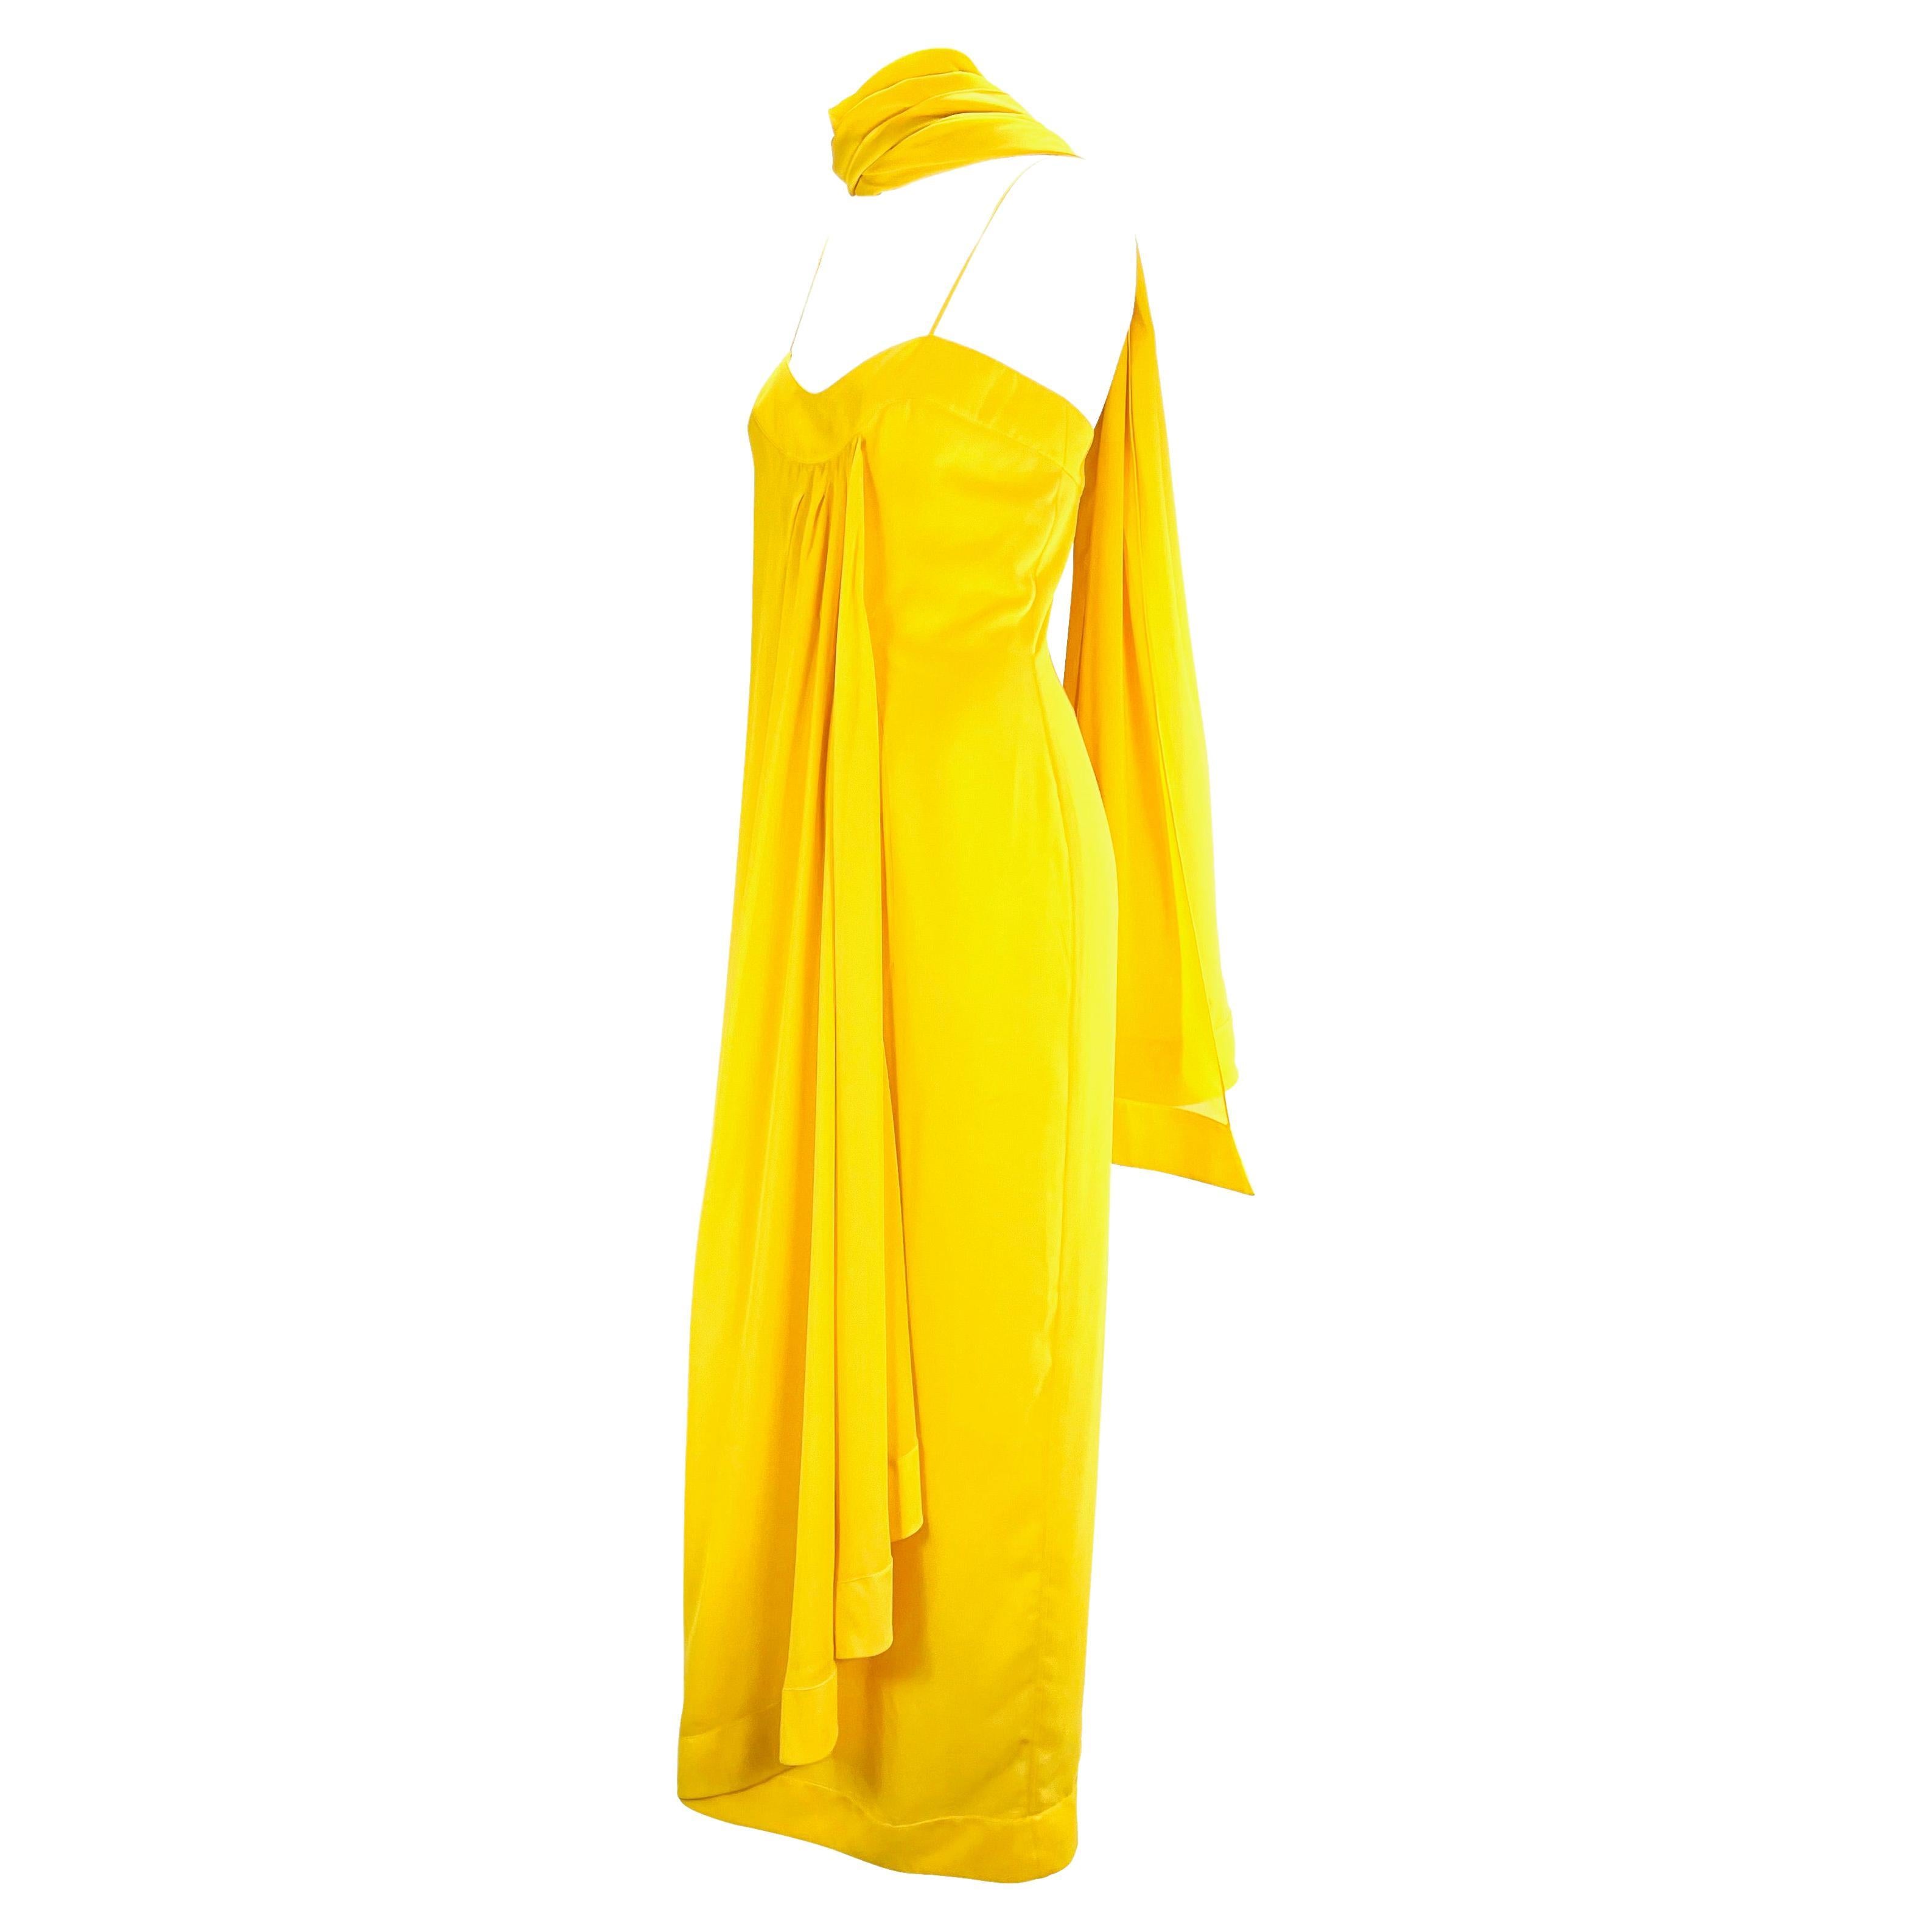 S/S 2000 Thierry Mugler Canary Yellow Chiffon Dress with Matching Shawl For Sale 4